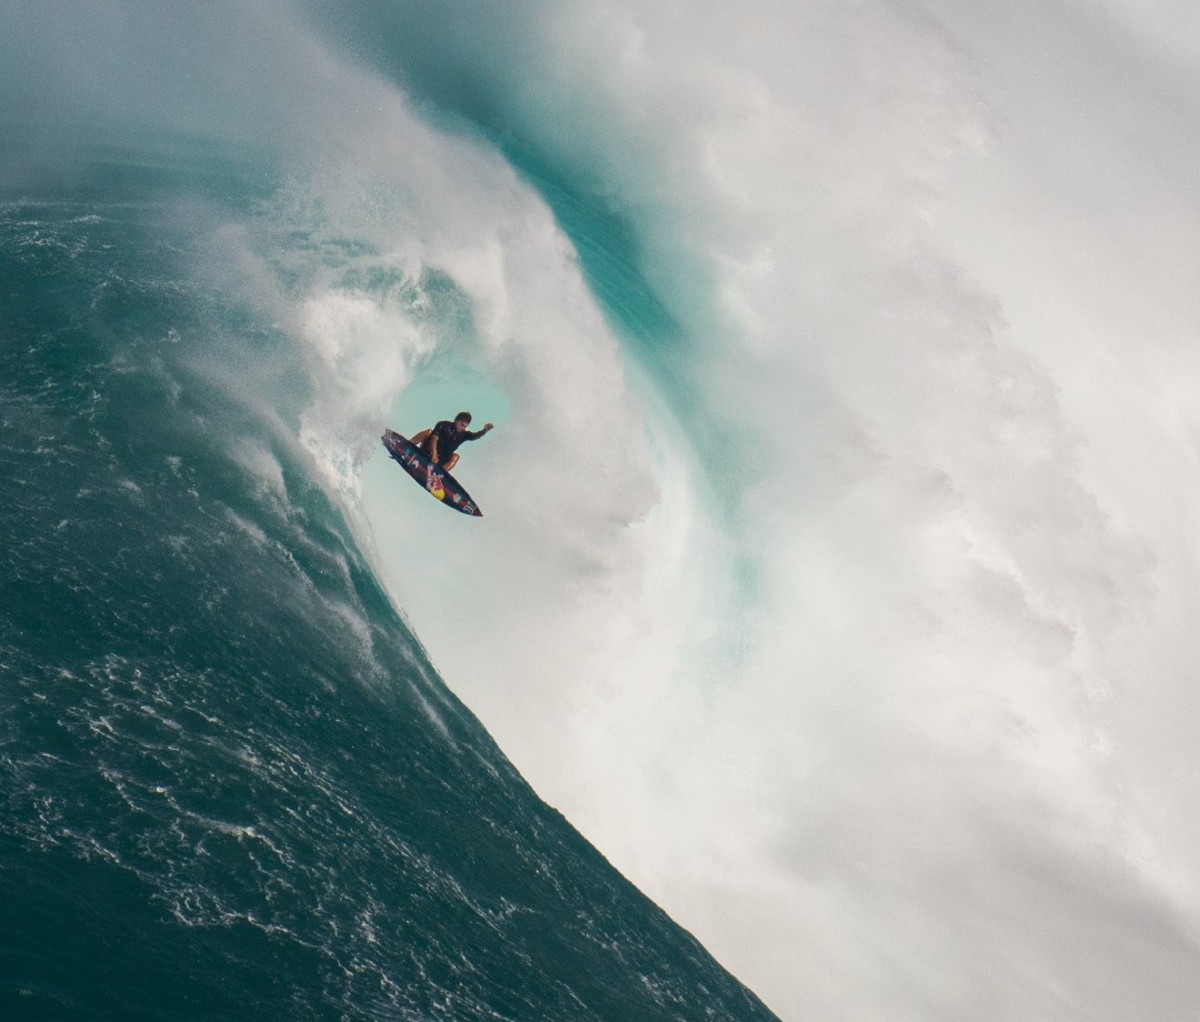 Kai Lenny takes air while riding a big wave